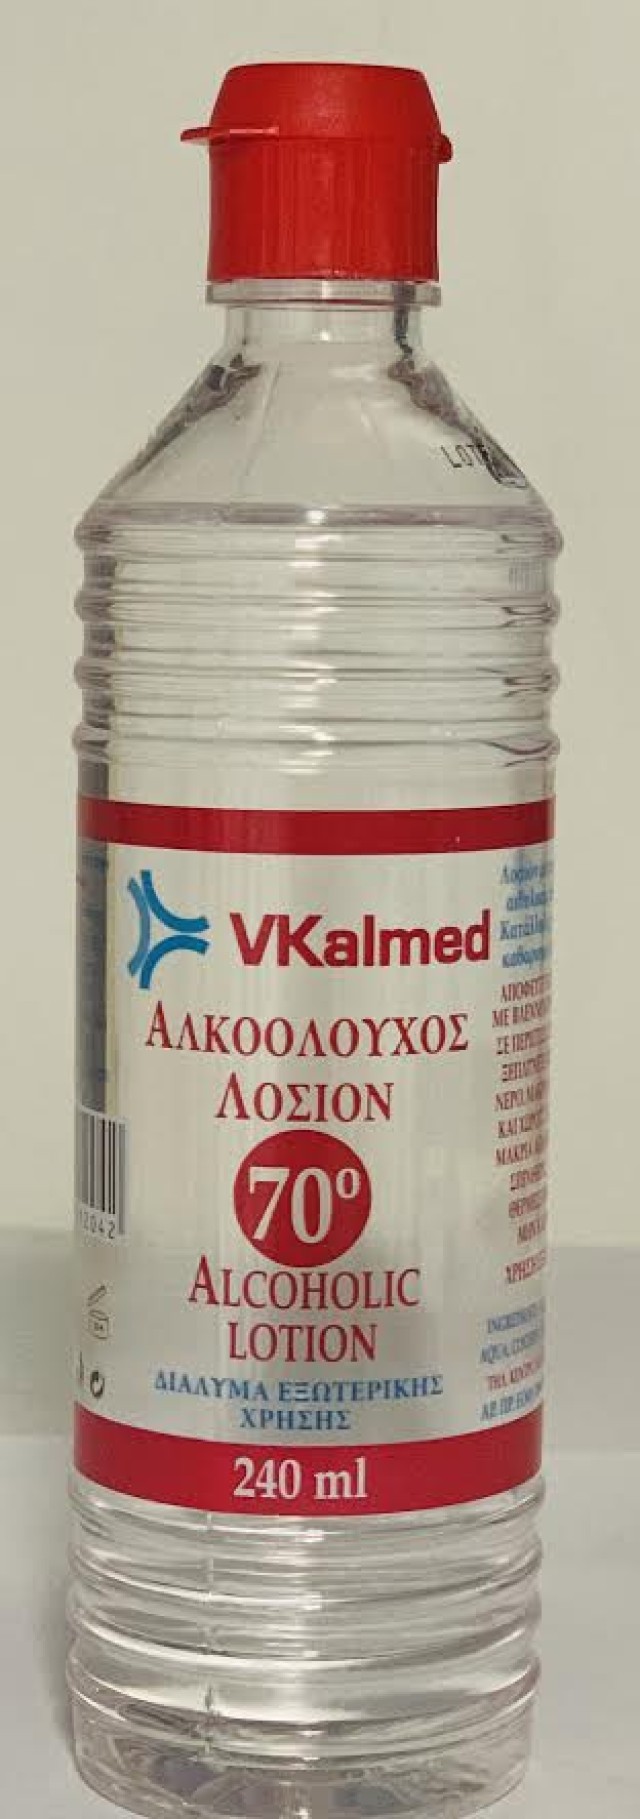 VKalmed Αλκοολούχος Λοσιόν 70° 240ml